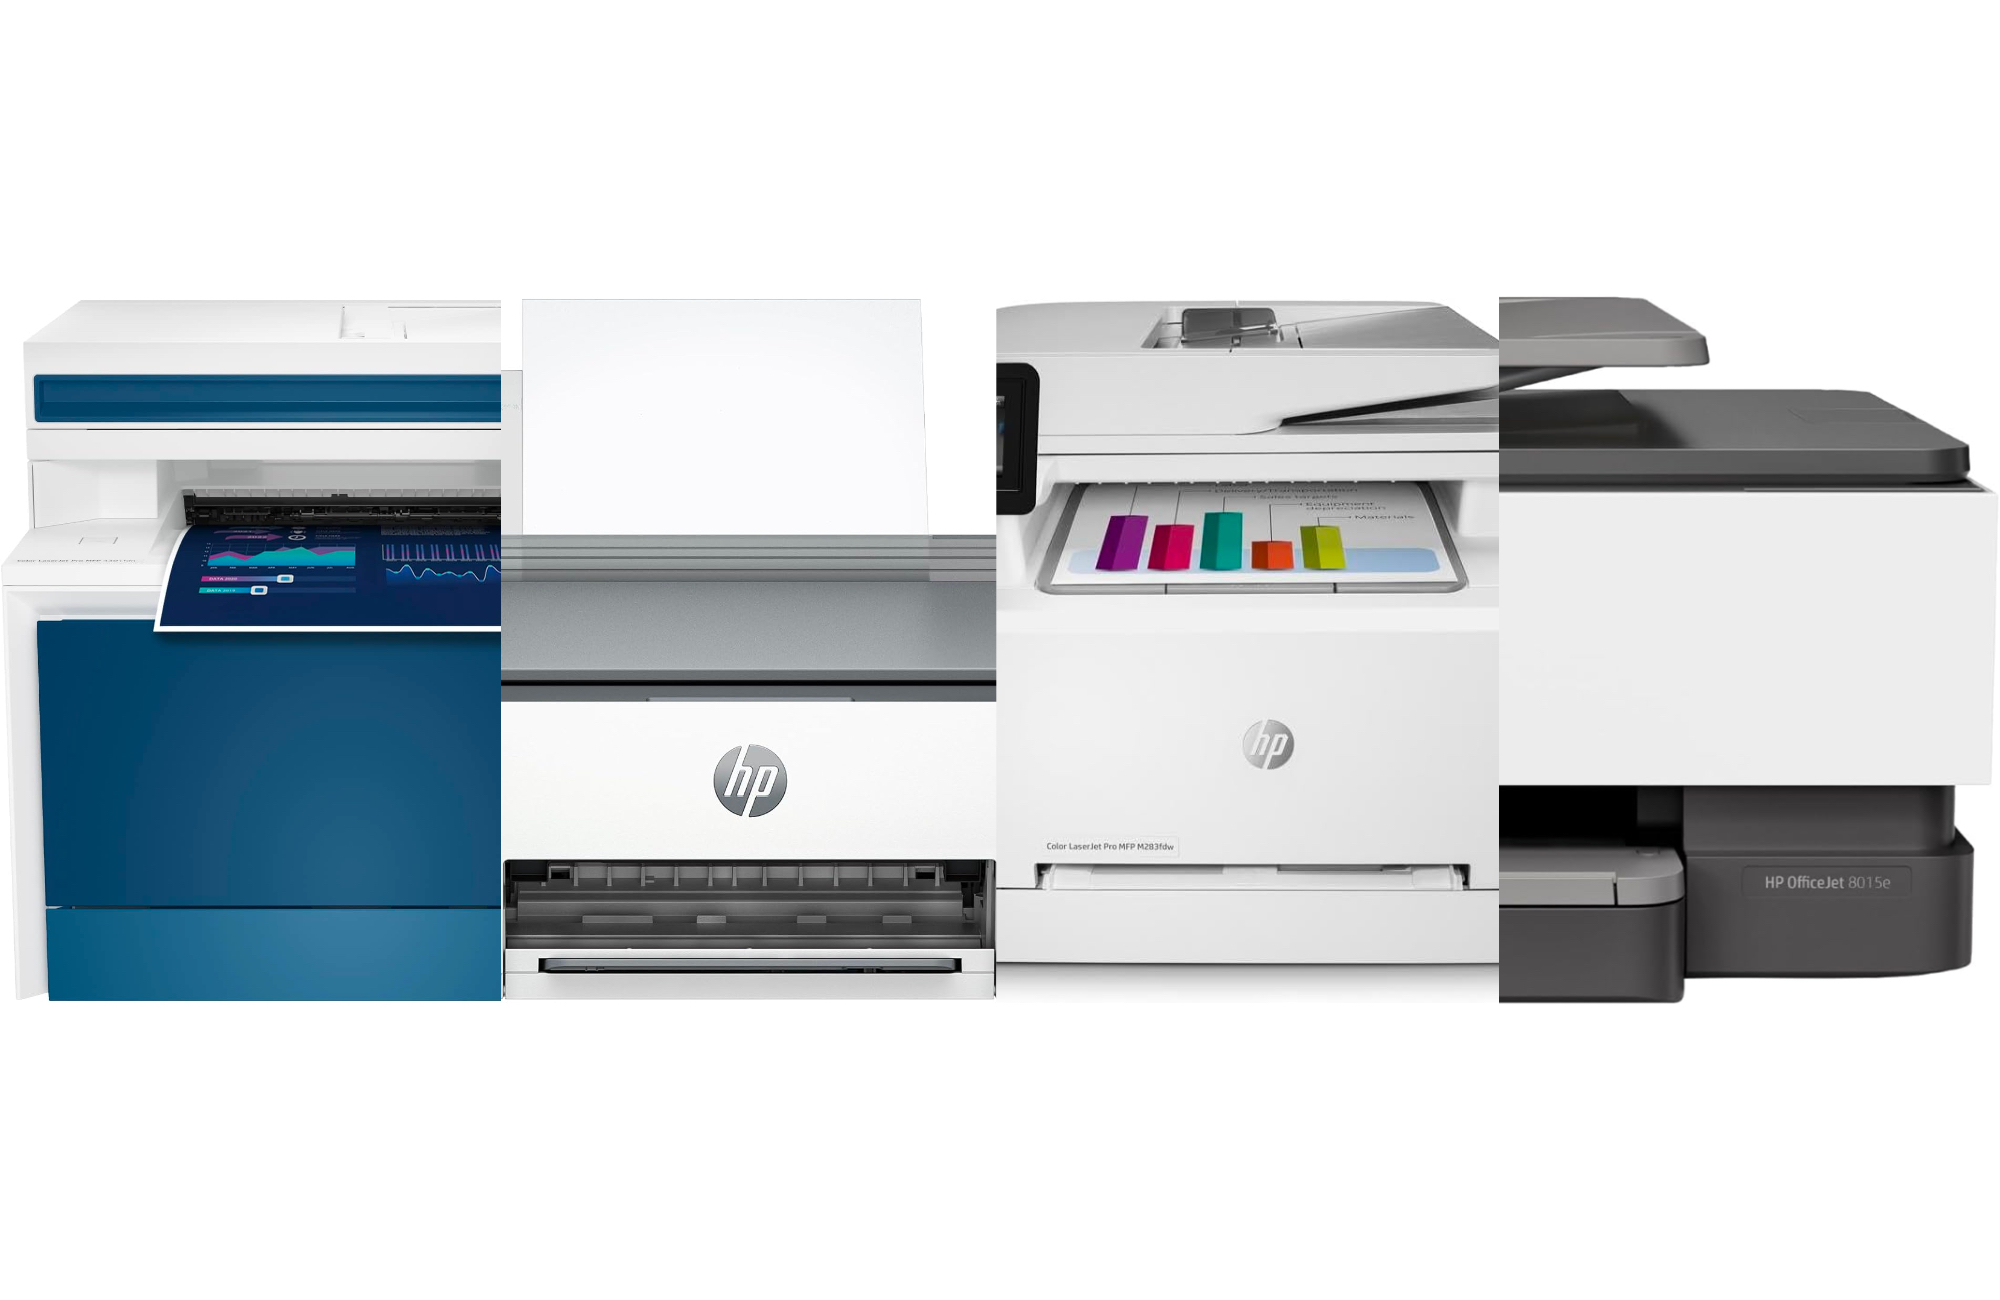 HP Smart Tank 5101 Printer Review - Consumer Reports